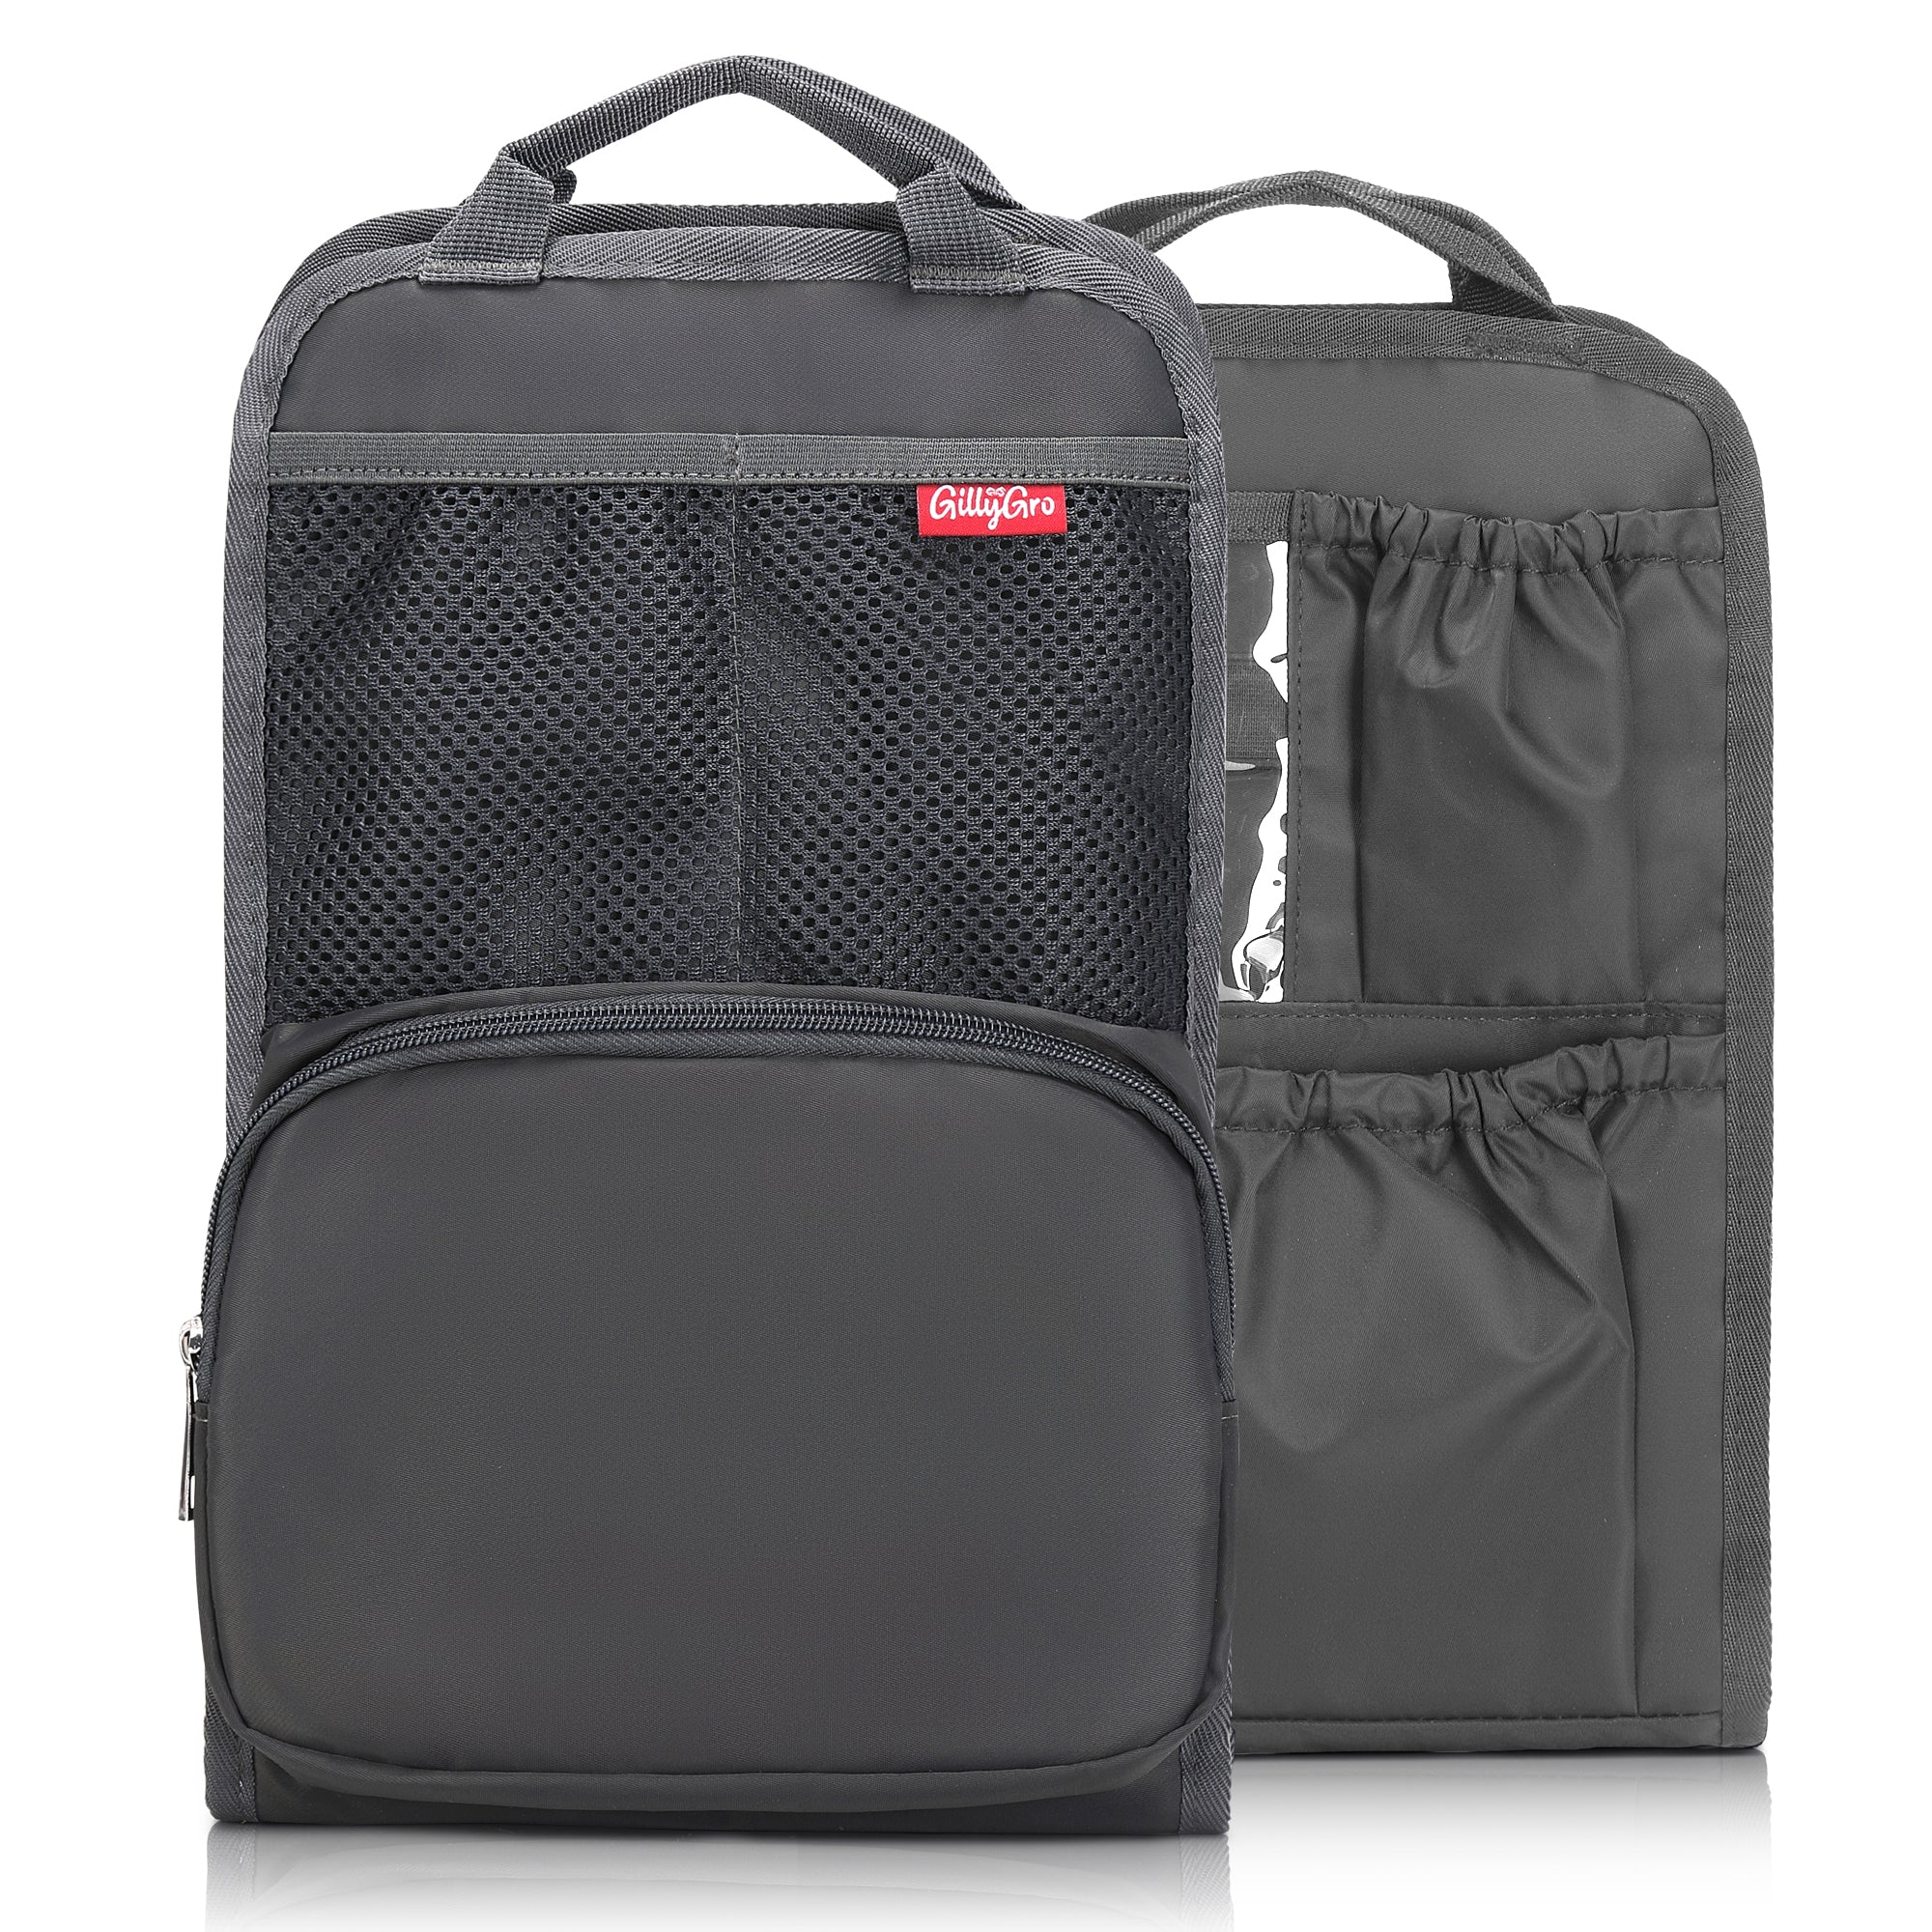 5 in 1 Travel Backpack Set with Inbuilt Booster